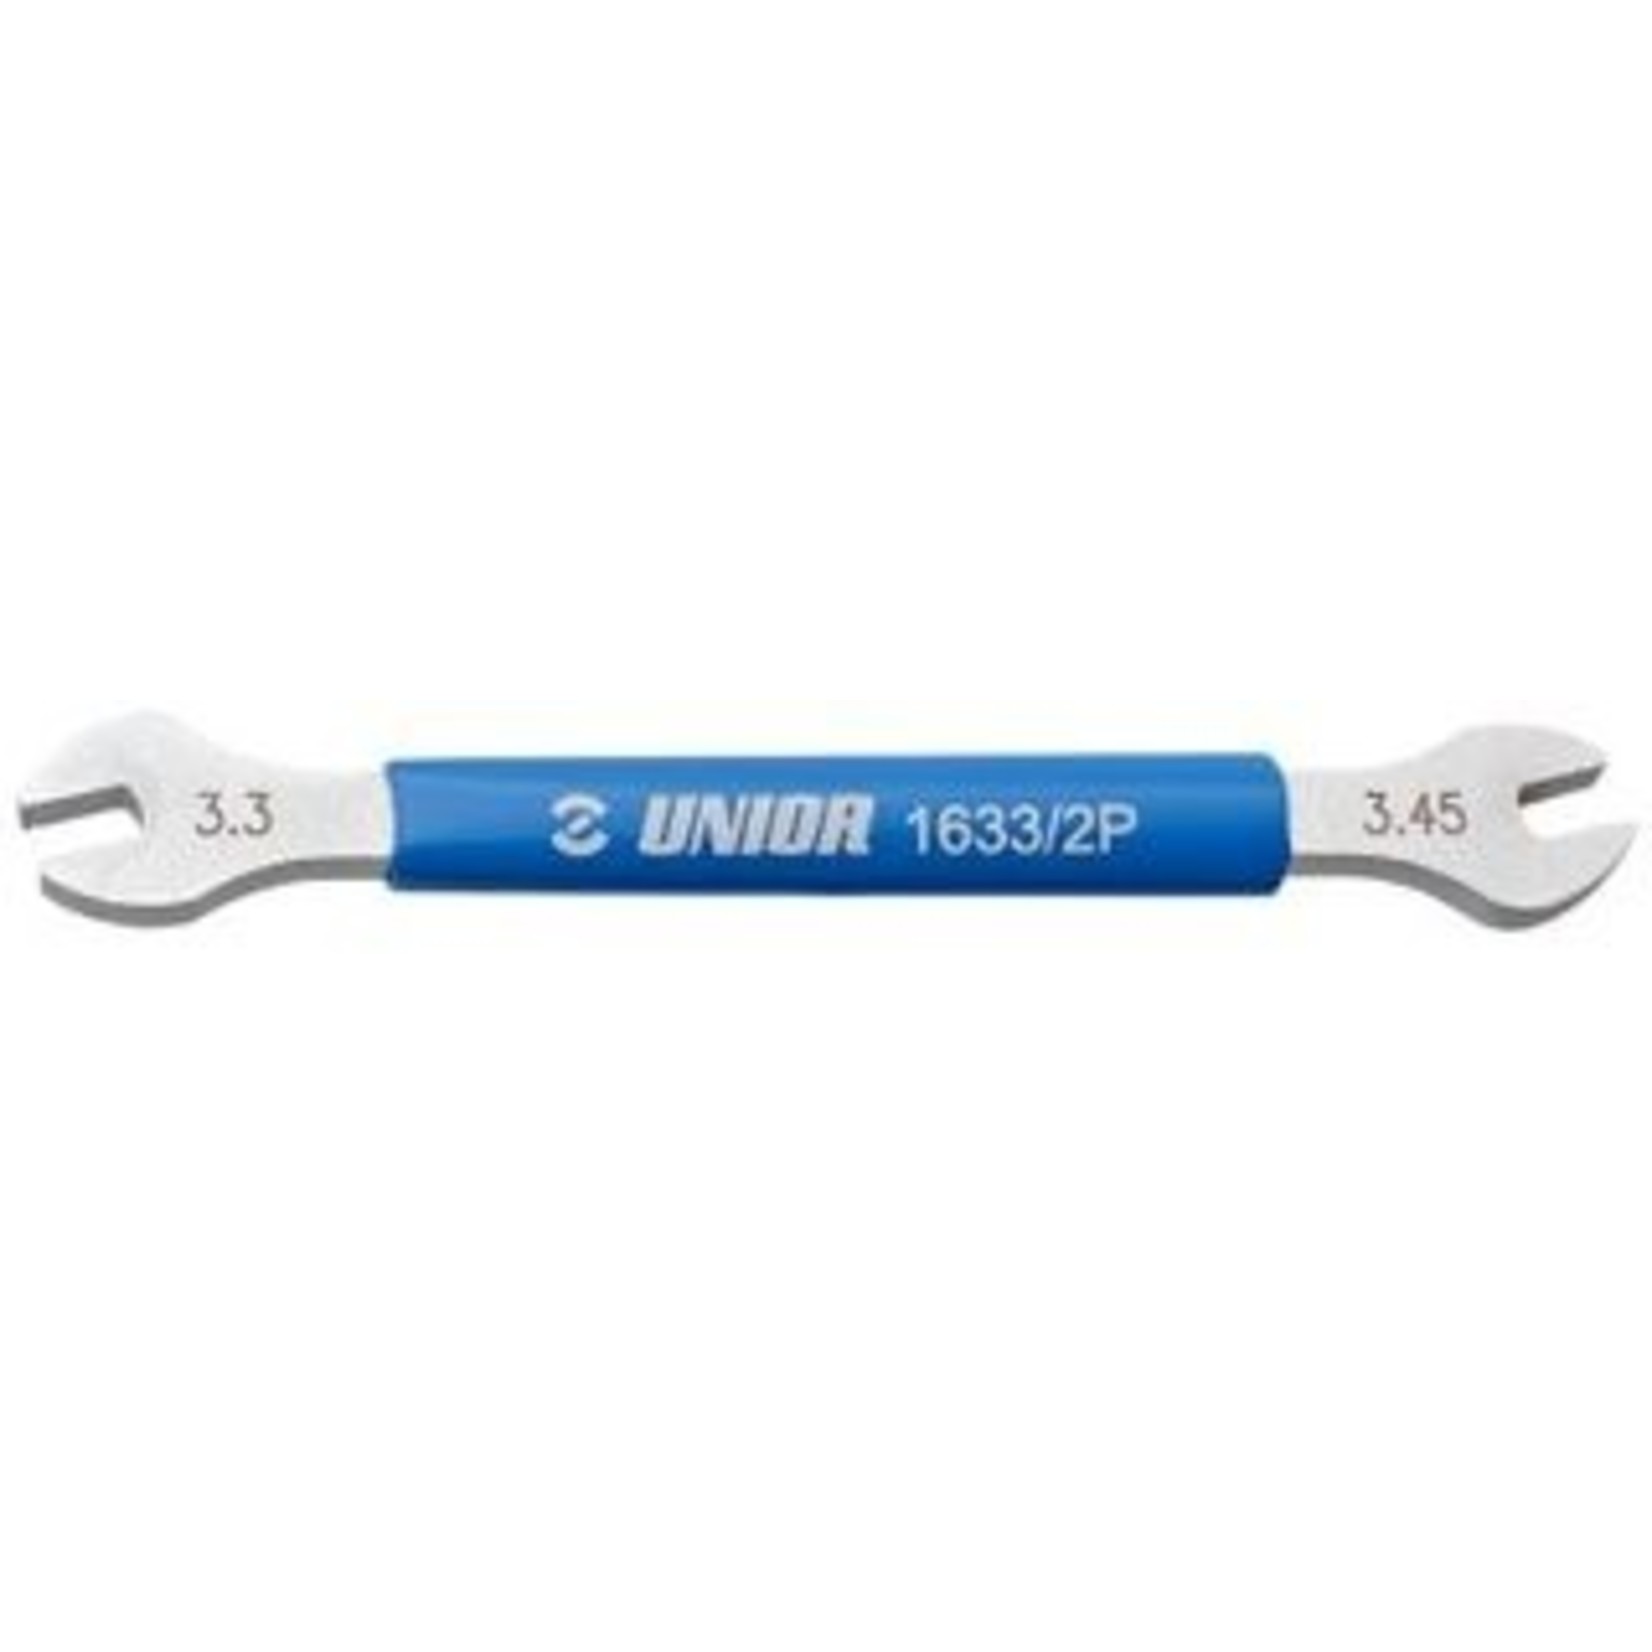 unior Unior Spoke Key 4mm/4.5mm 620179 Professional Bicycle Tool Quality Guaranteed